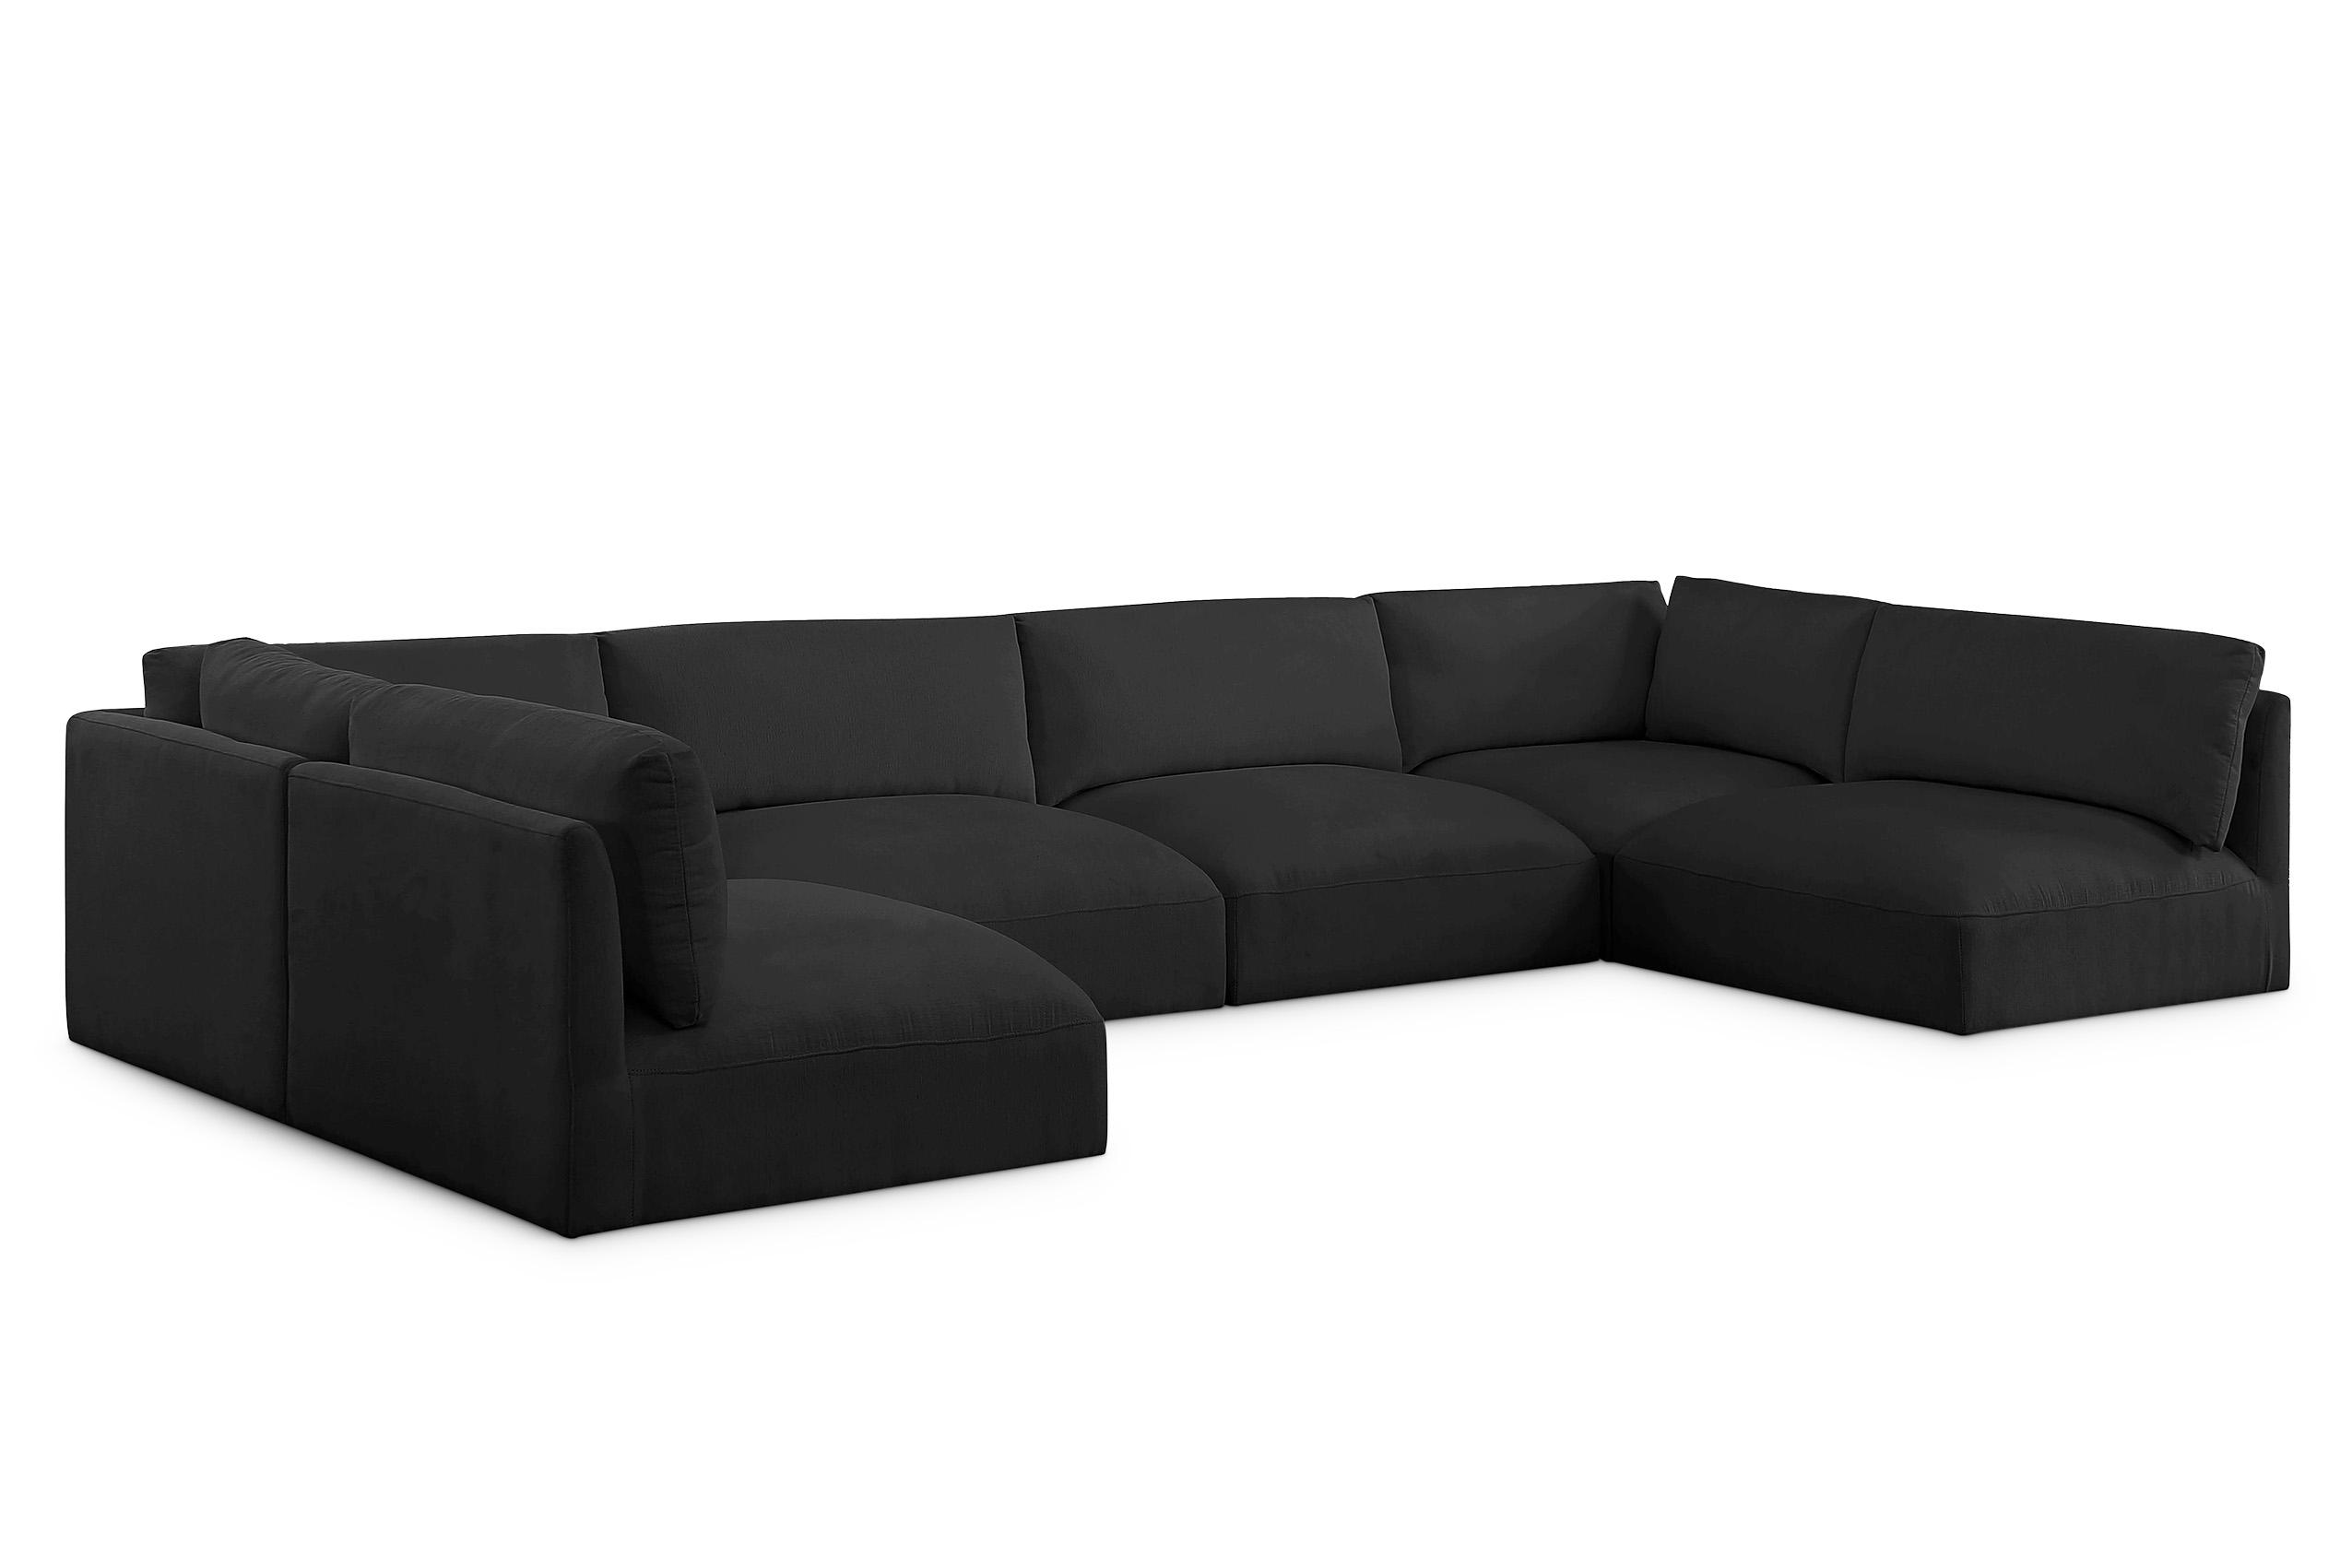 Contemporary, Modern Modular Sectional Sofa EASE 696Black-Sec6A 696Black-Sec6A in Black Fabric